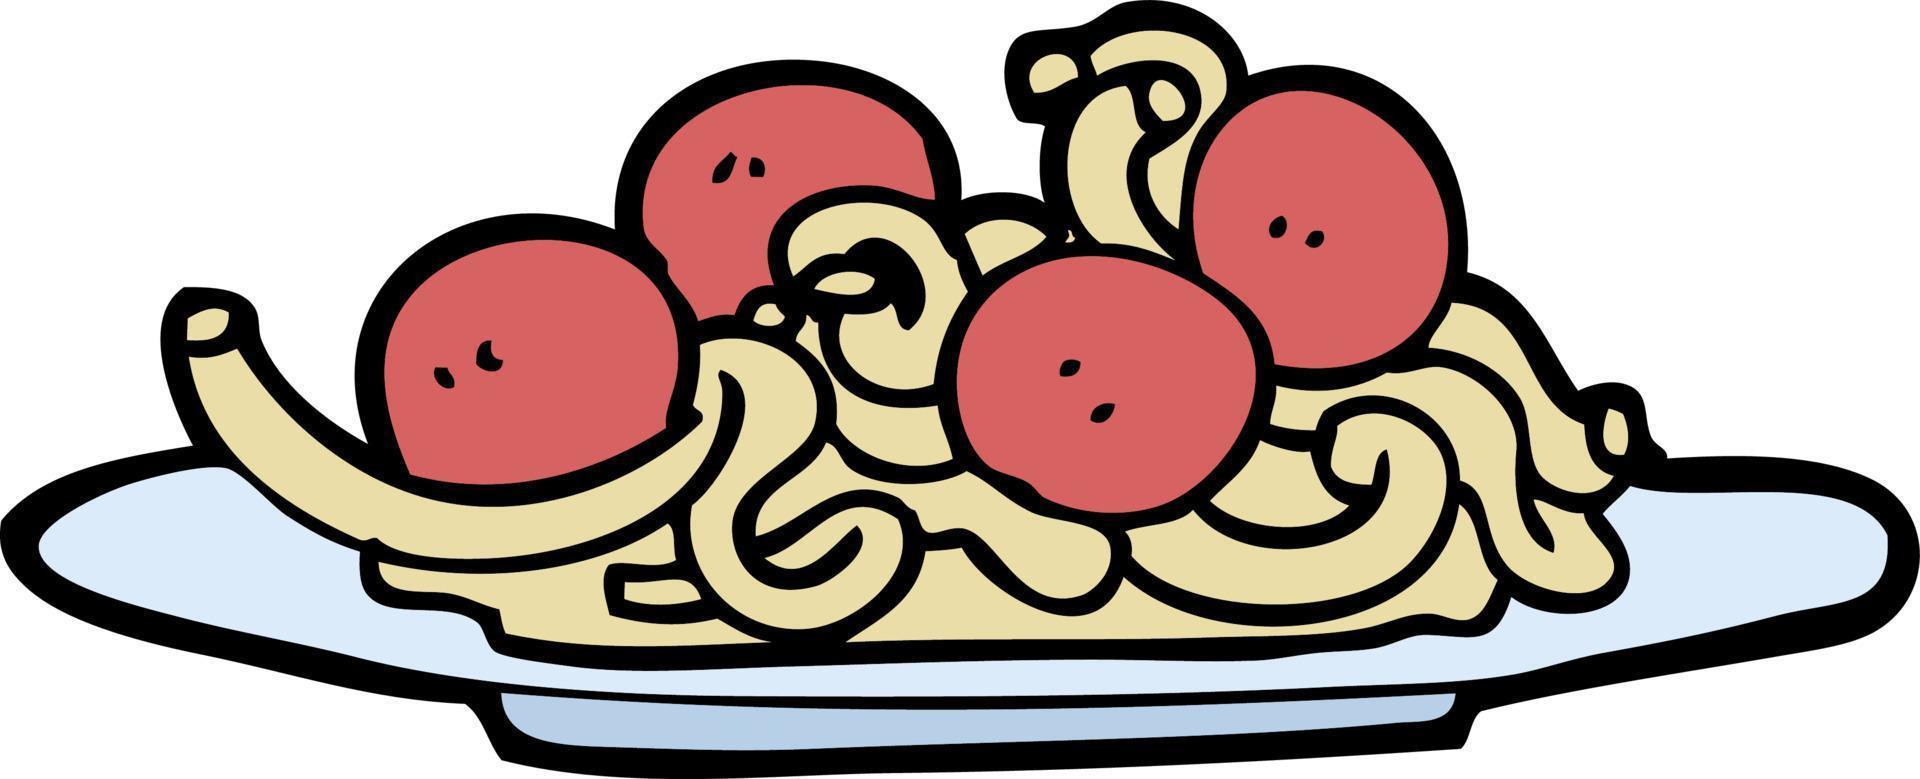 hand drawn doodle style cartoon spaghetti and meatballs vector